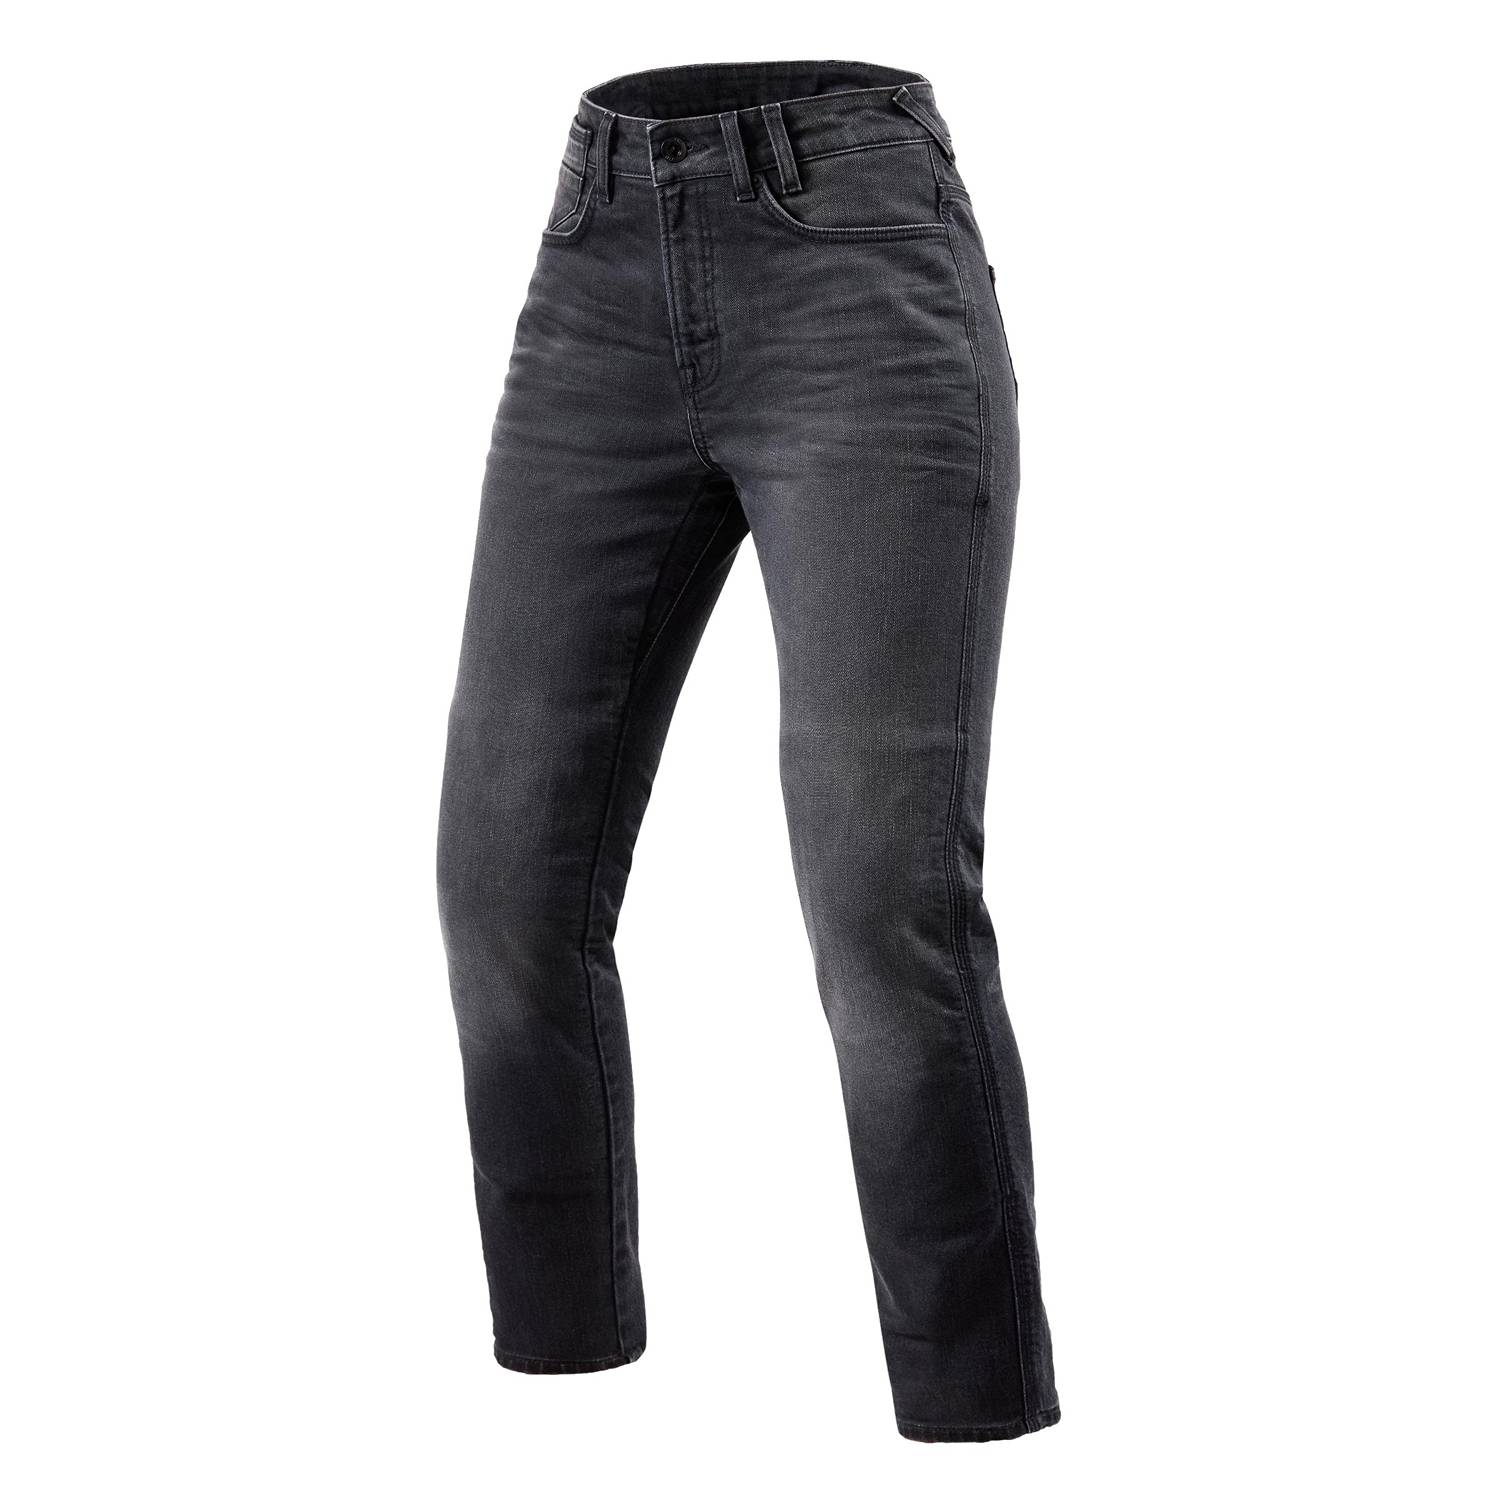 Image of REV'IT! Jeans Victoria 2 Ladies SF Mid Grey Used Motorcycle Jeans Size L30/W31 EN